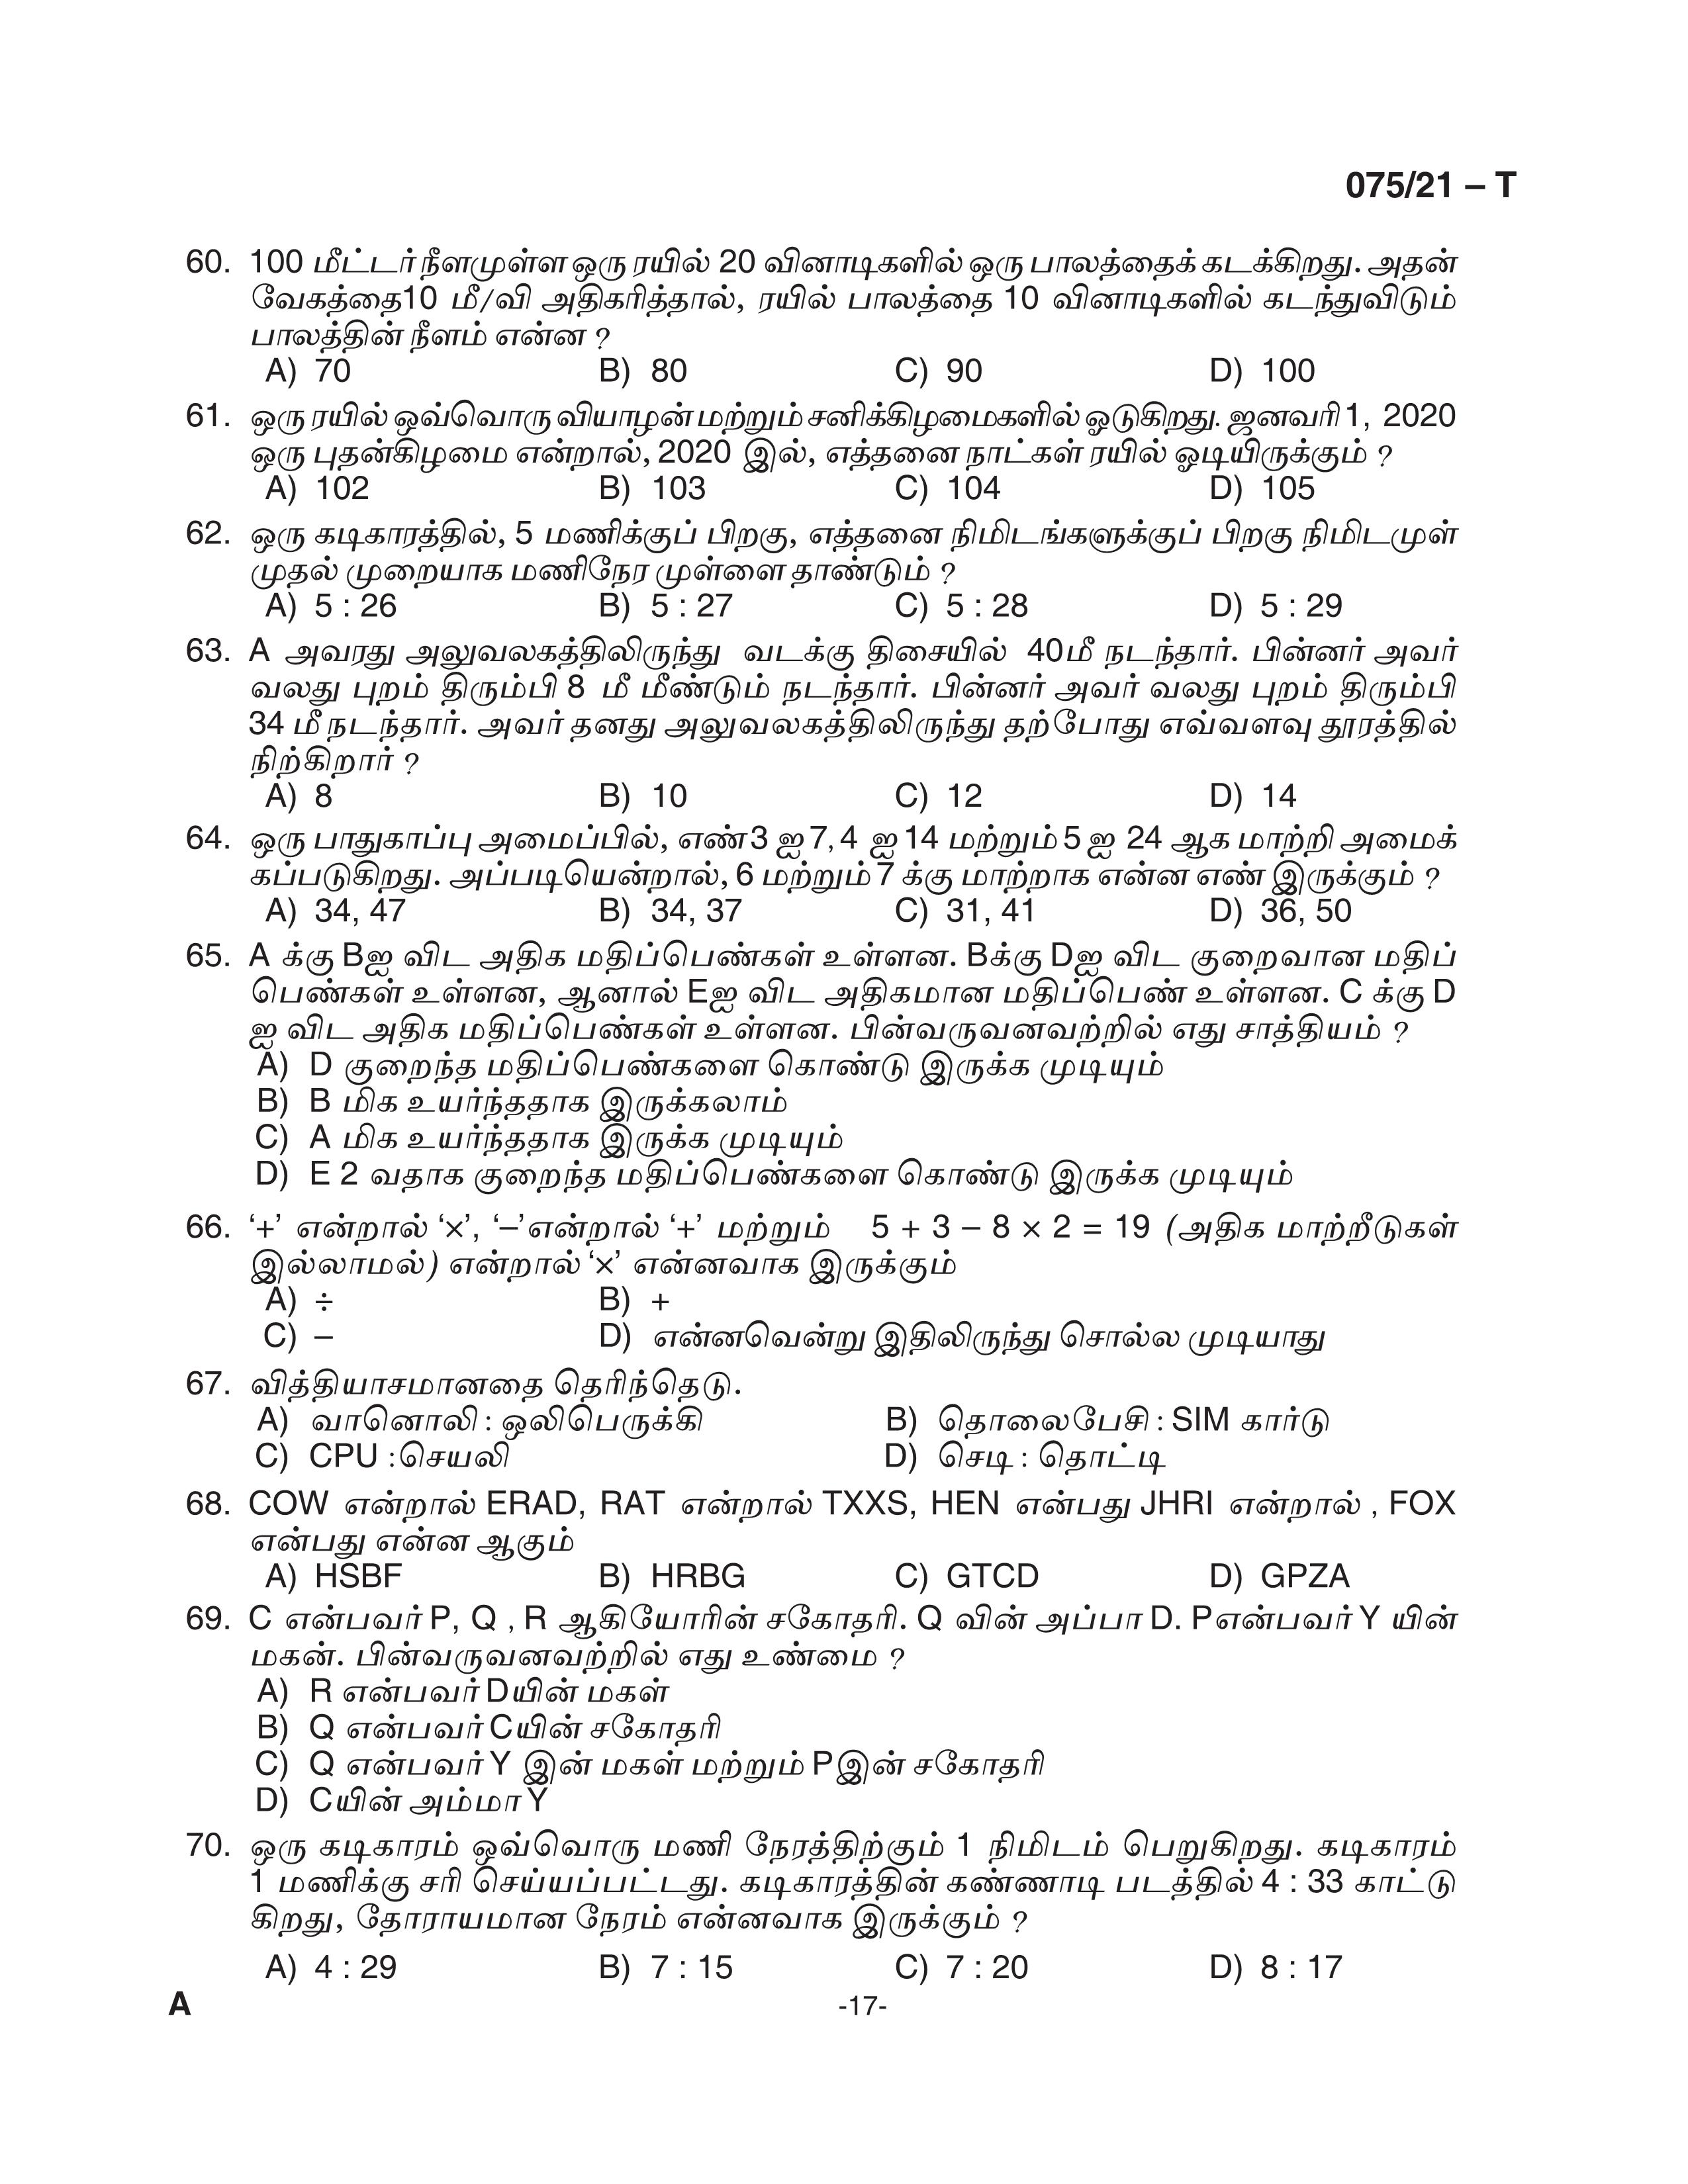 KPSC Degree Level Preliminary Exam Stage I Tamil 2021 Code 07521 T 17